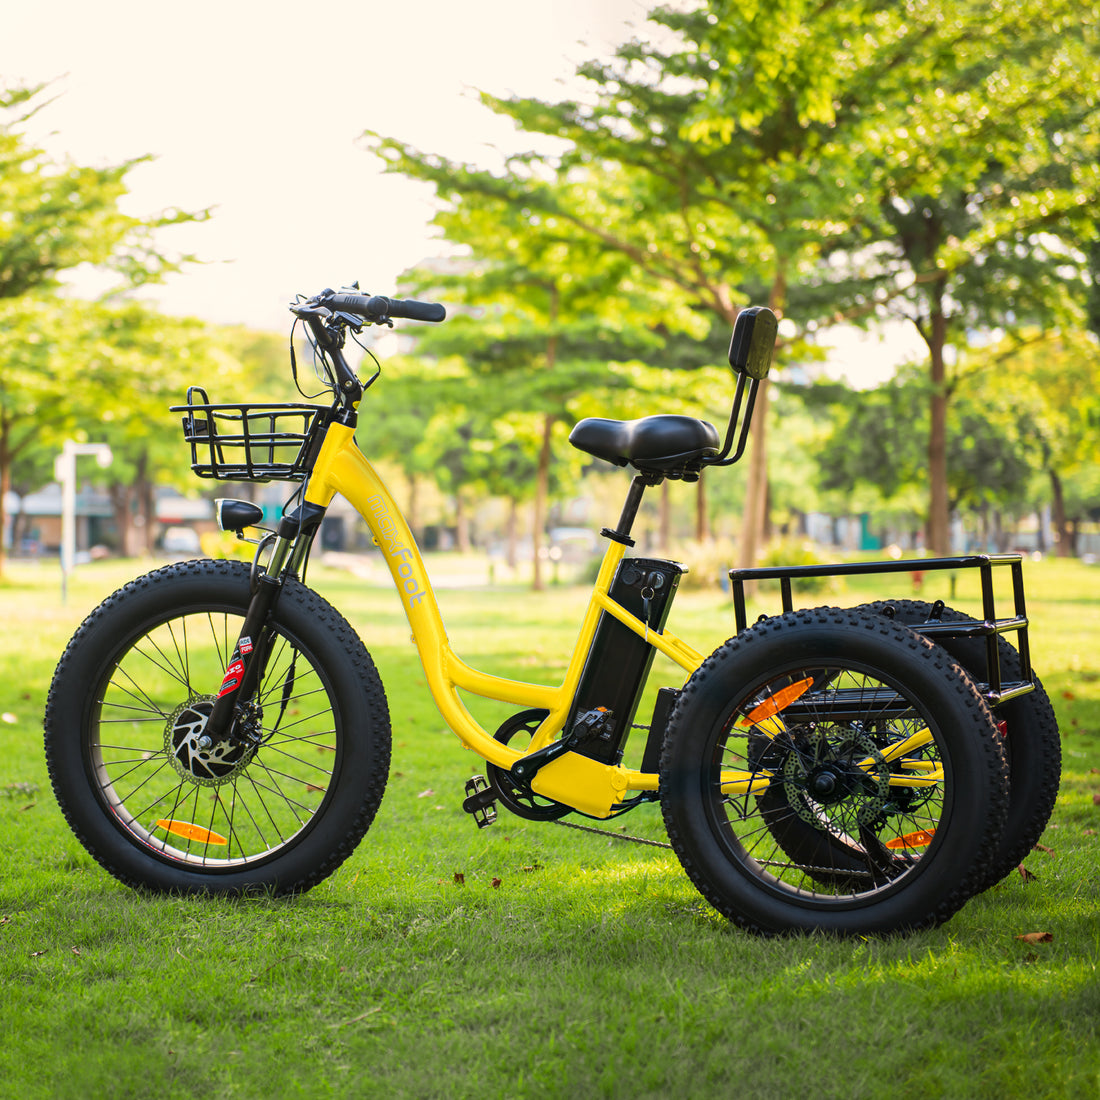 Go Green with the MAXFOOT MF30 Electric Trike Bike